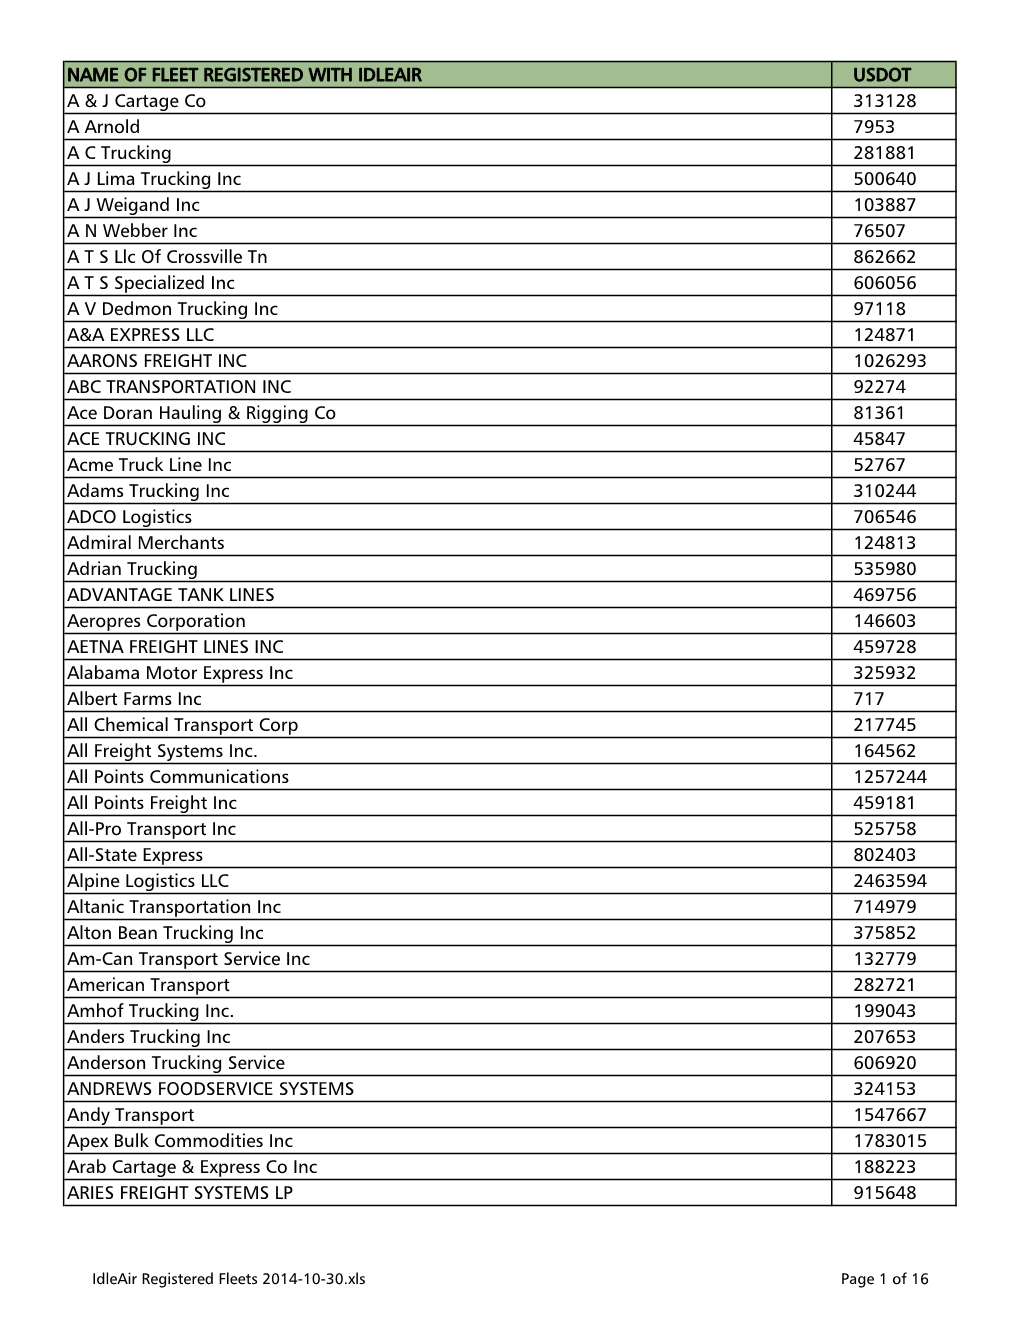 Idleair Registered Fleets 2014-10-30